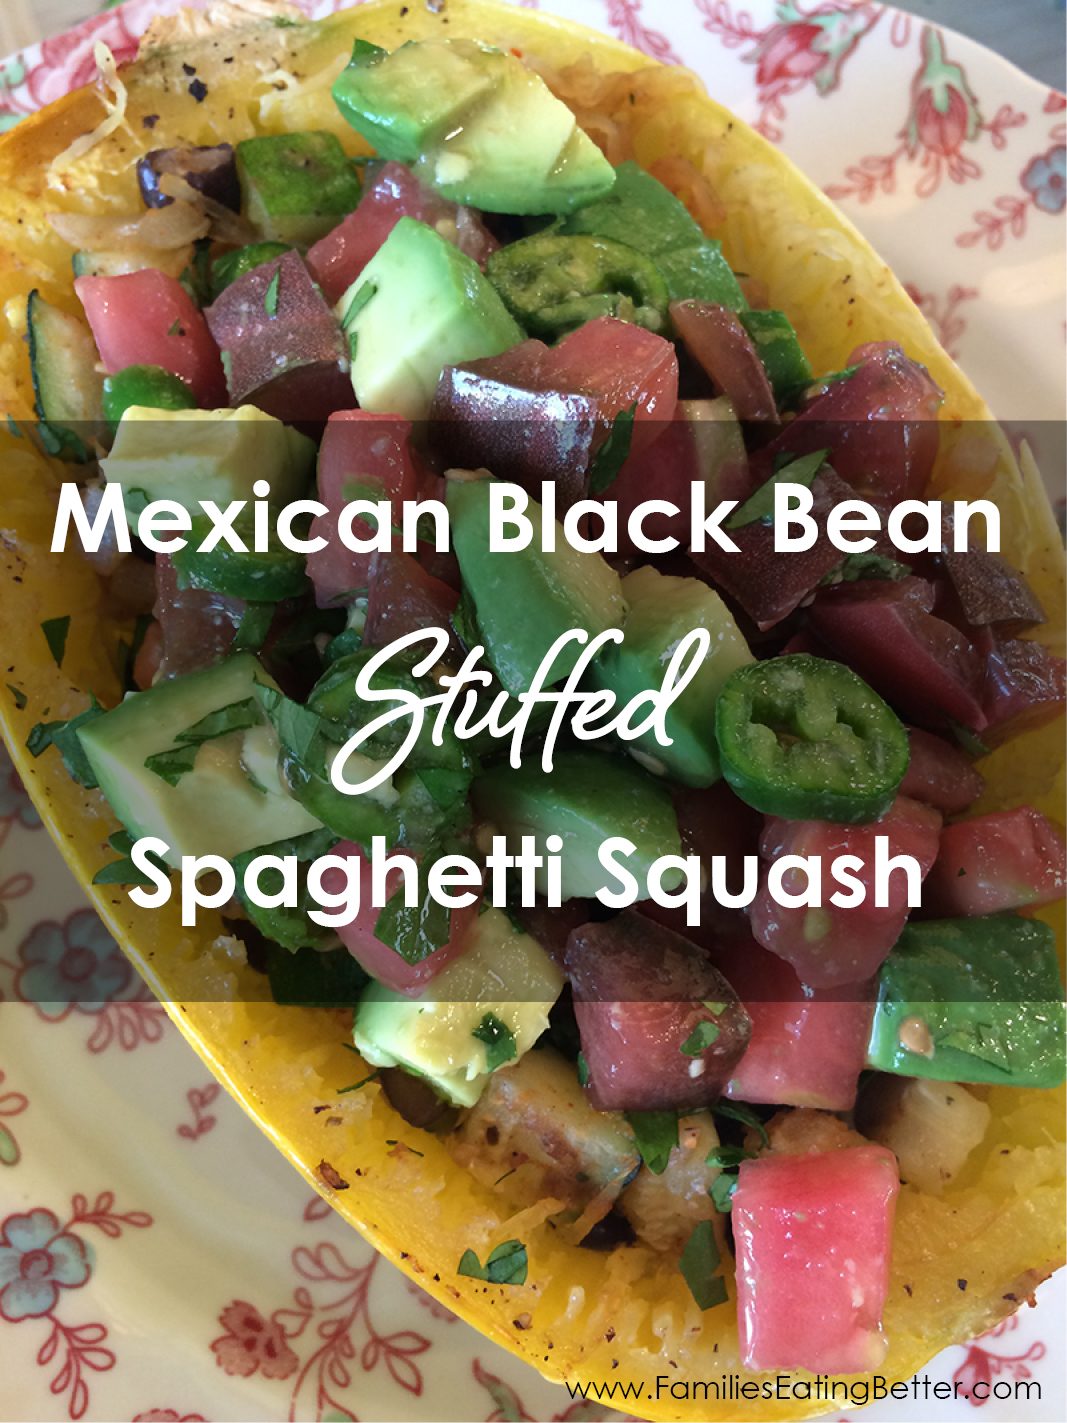 Mexican Black Bean Stuffed Spaghetti Squash Recipe - WFPB, Vegan, Vegetarian, GF